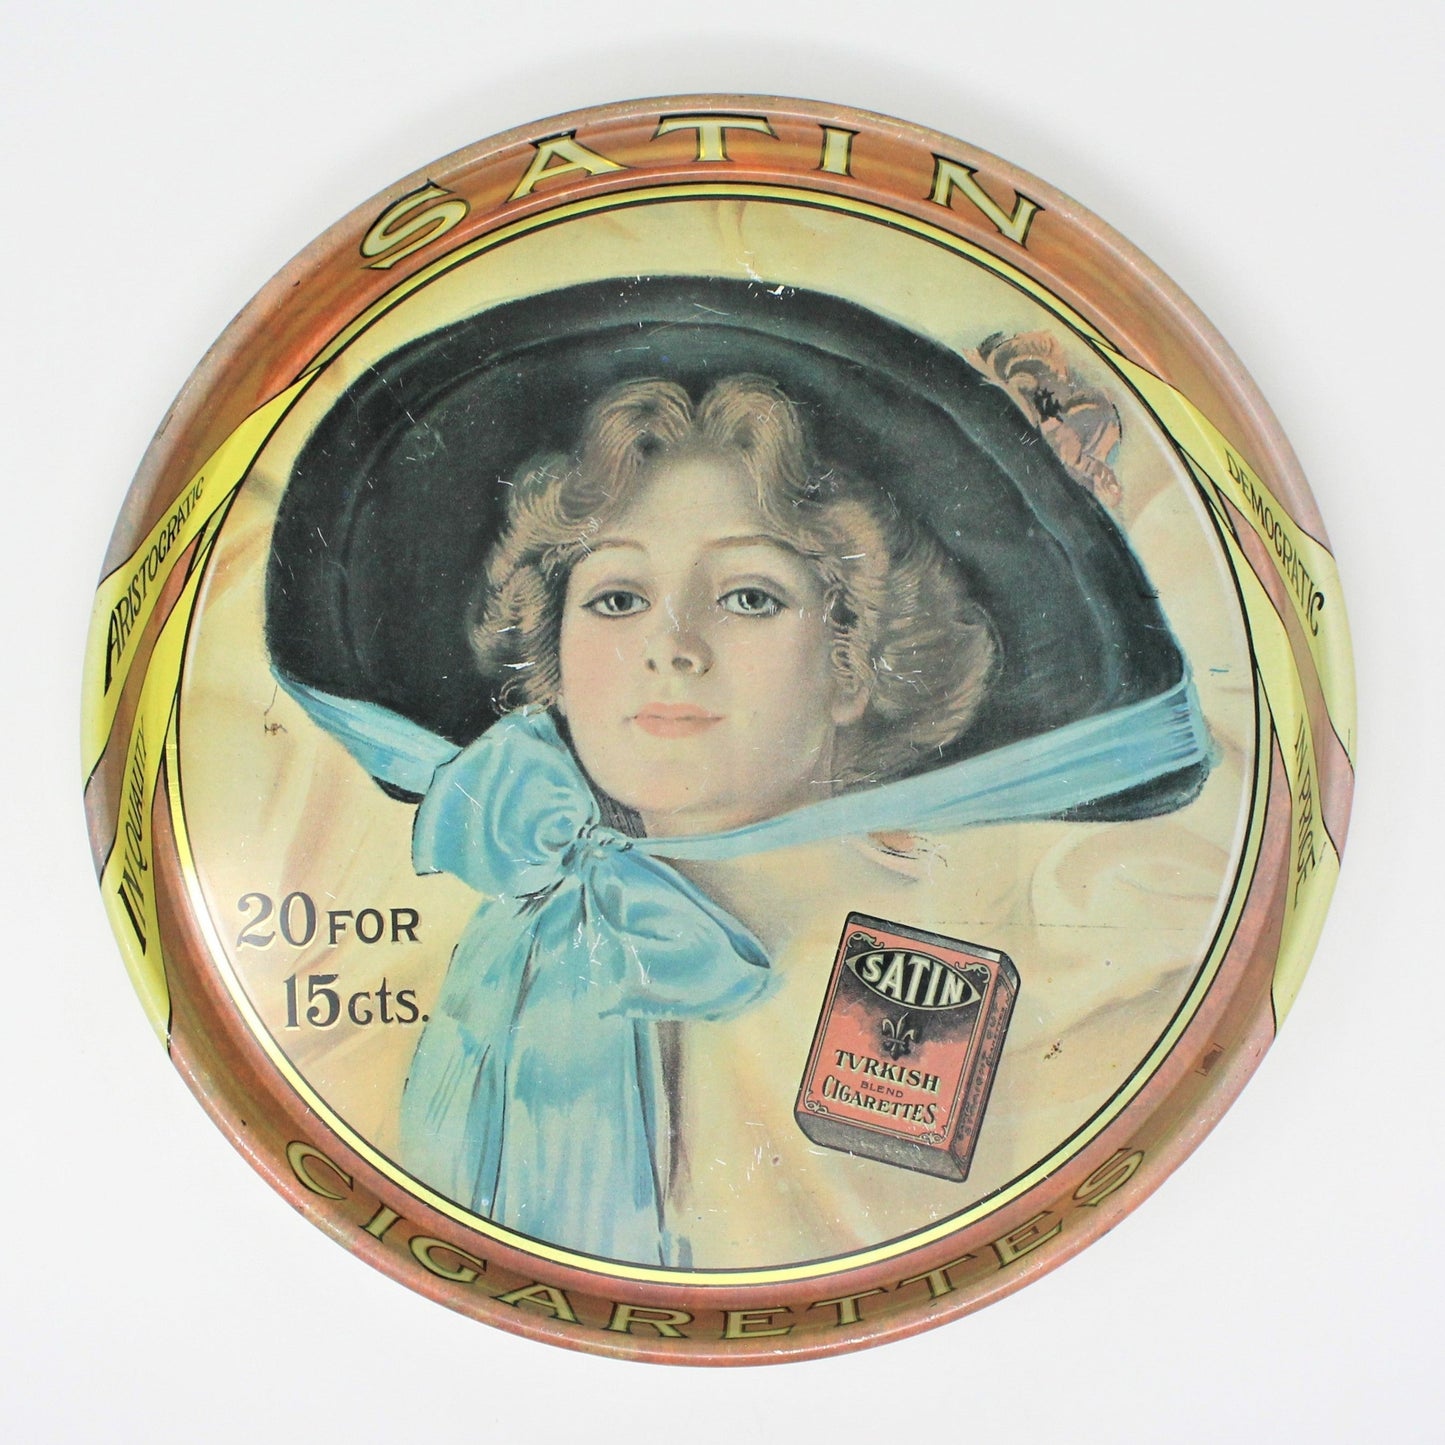 Tray, Satin Turkish Cigarettes, Tin/Metal Vintage Advertisement, 14"